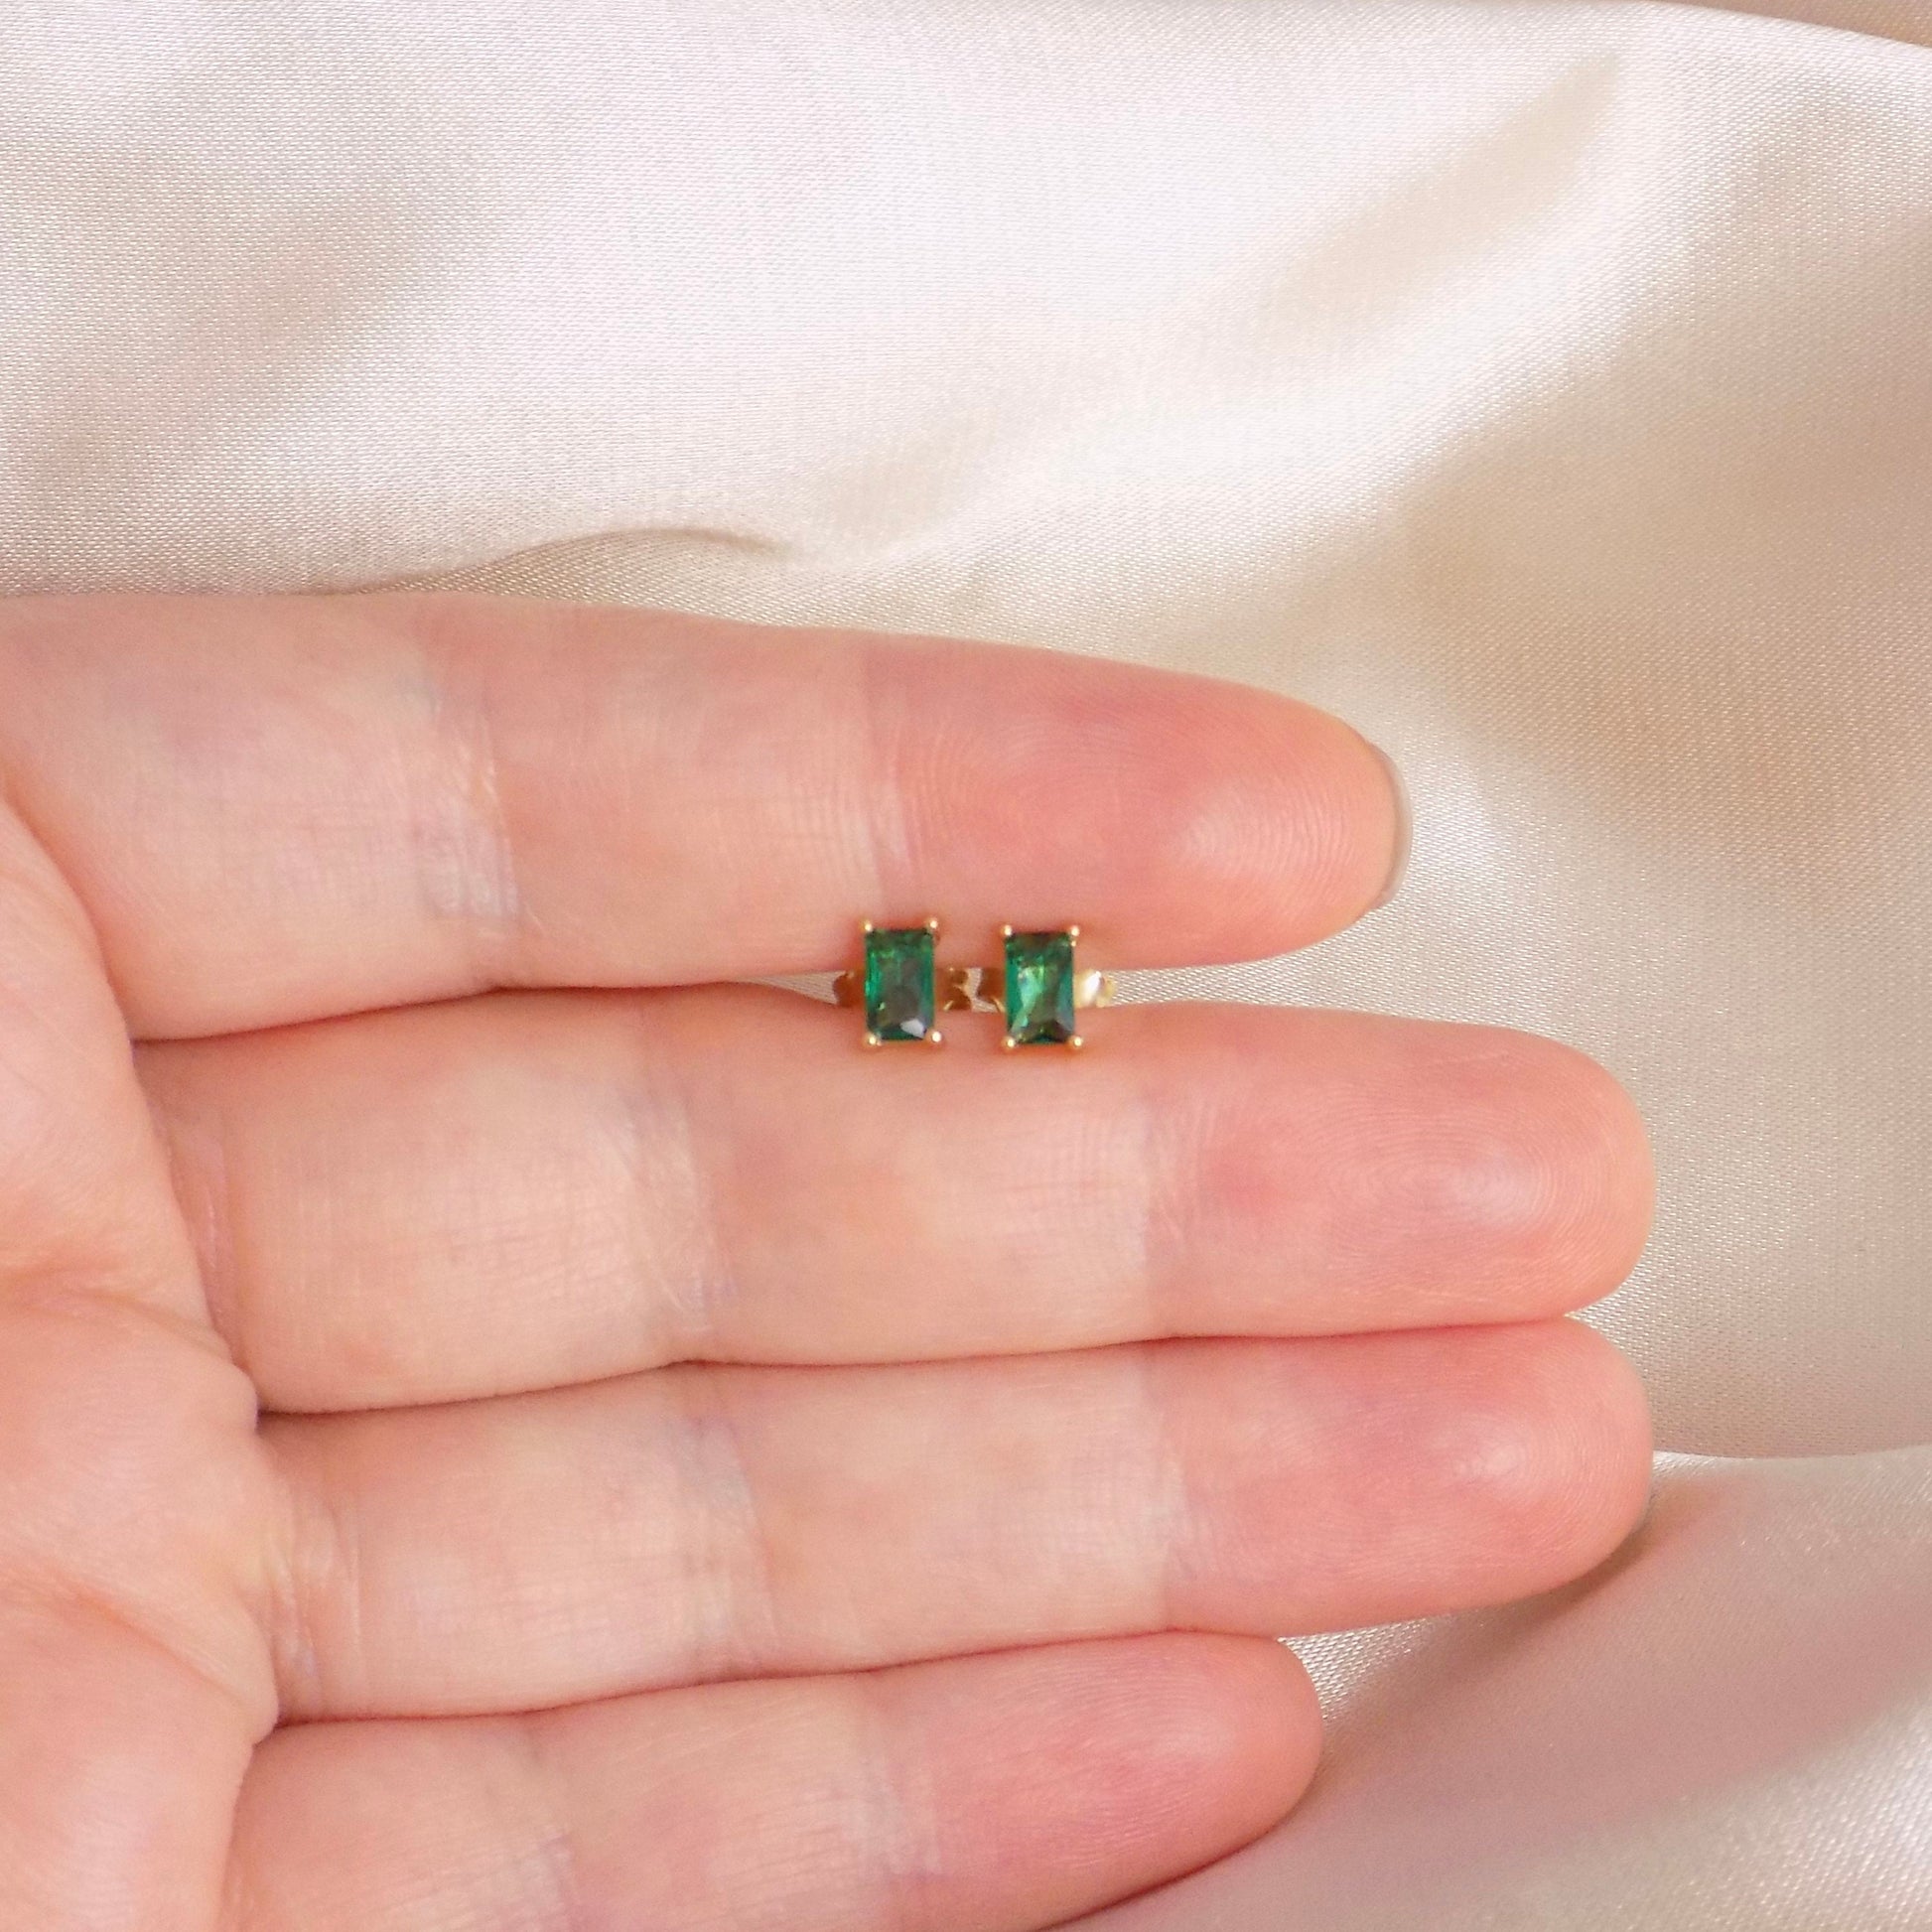 Tiny Green Emerald Stud Earrings Gold Baguette Cut, 5mm x 3mm, May Birthstone Studs, Gift Women, M6-790